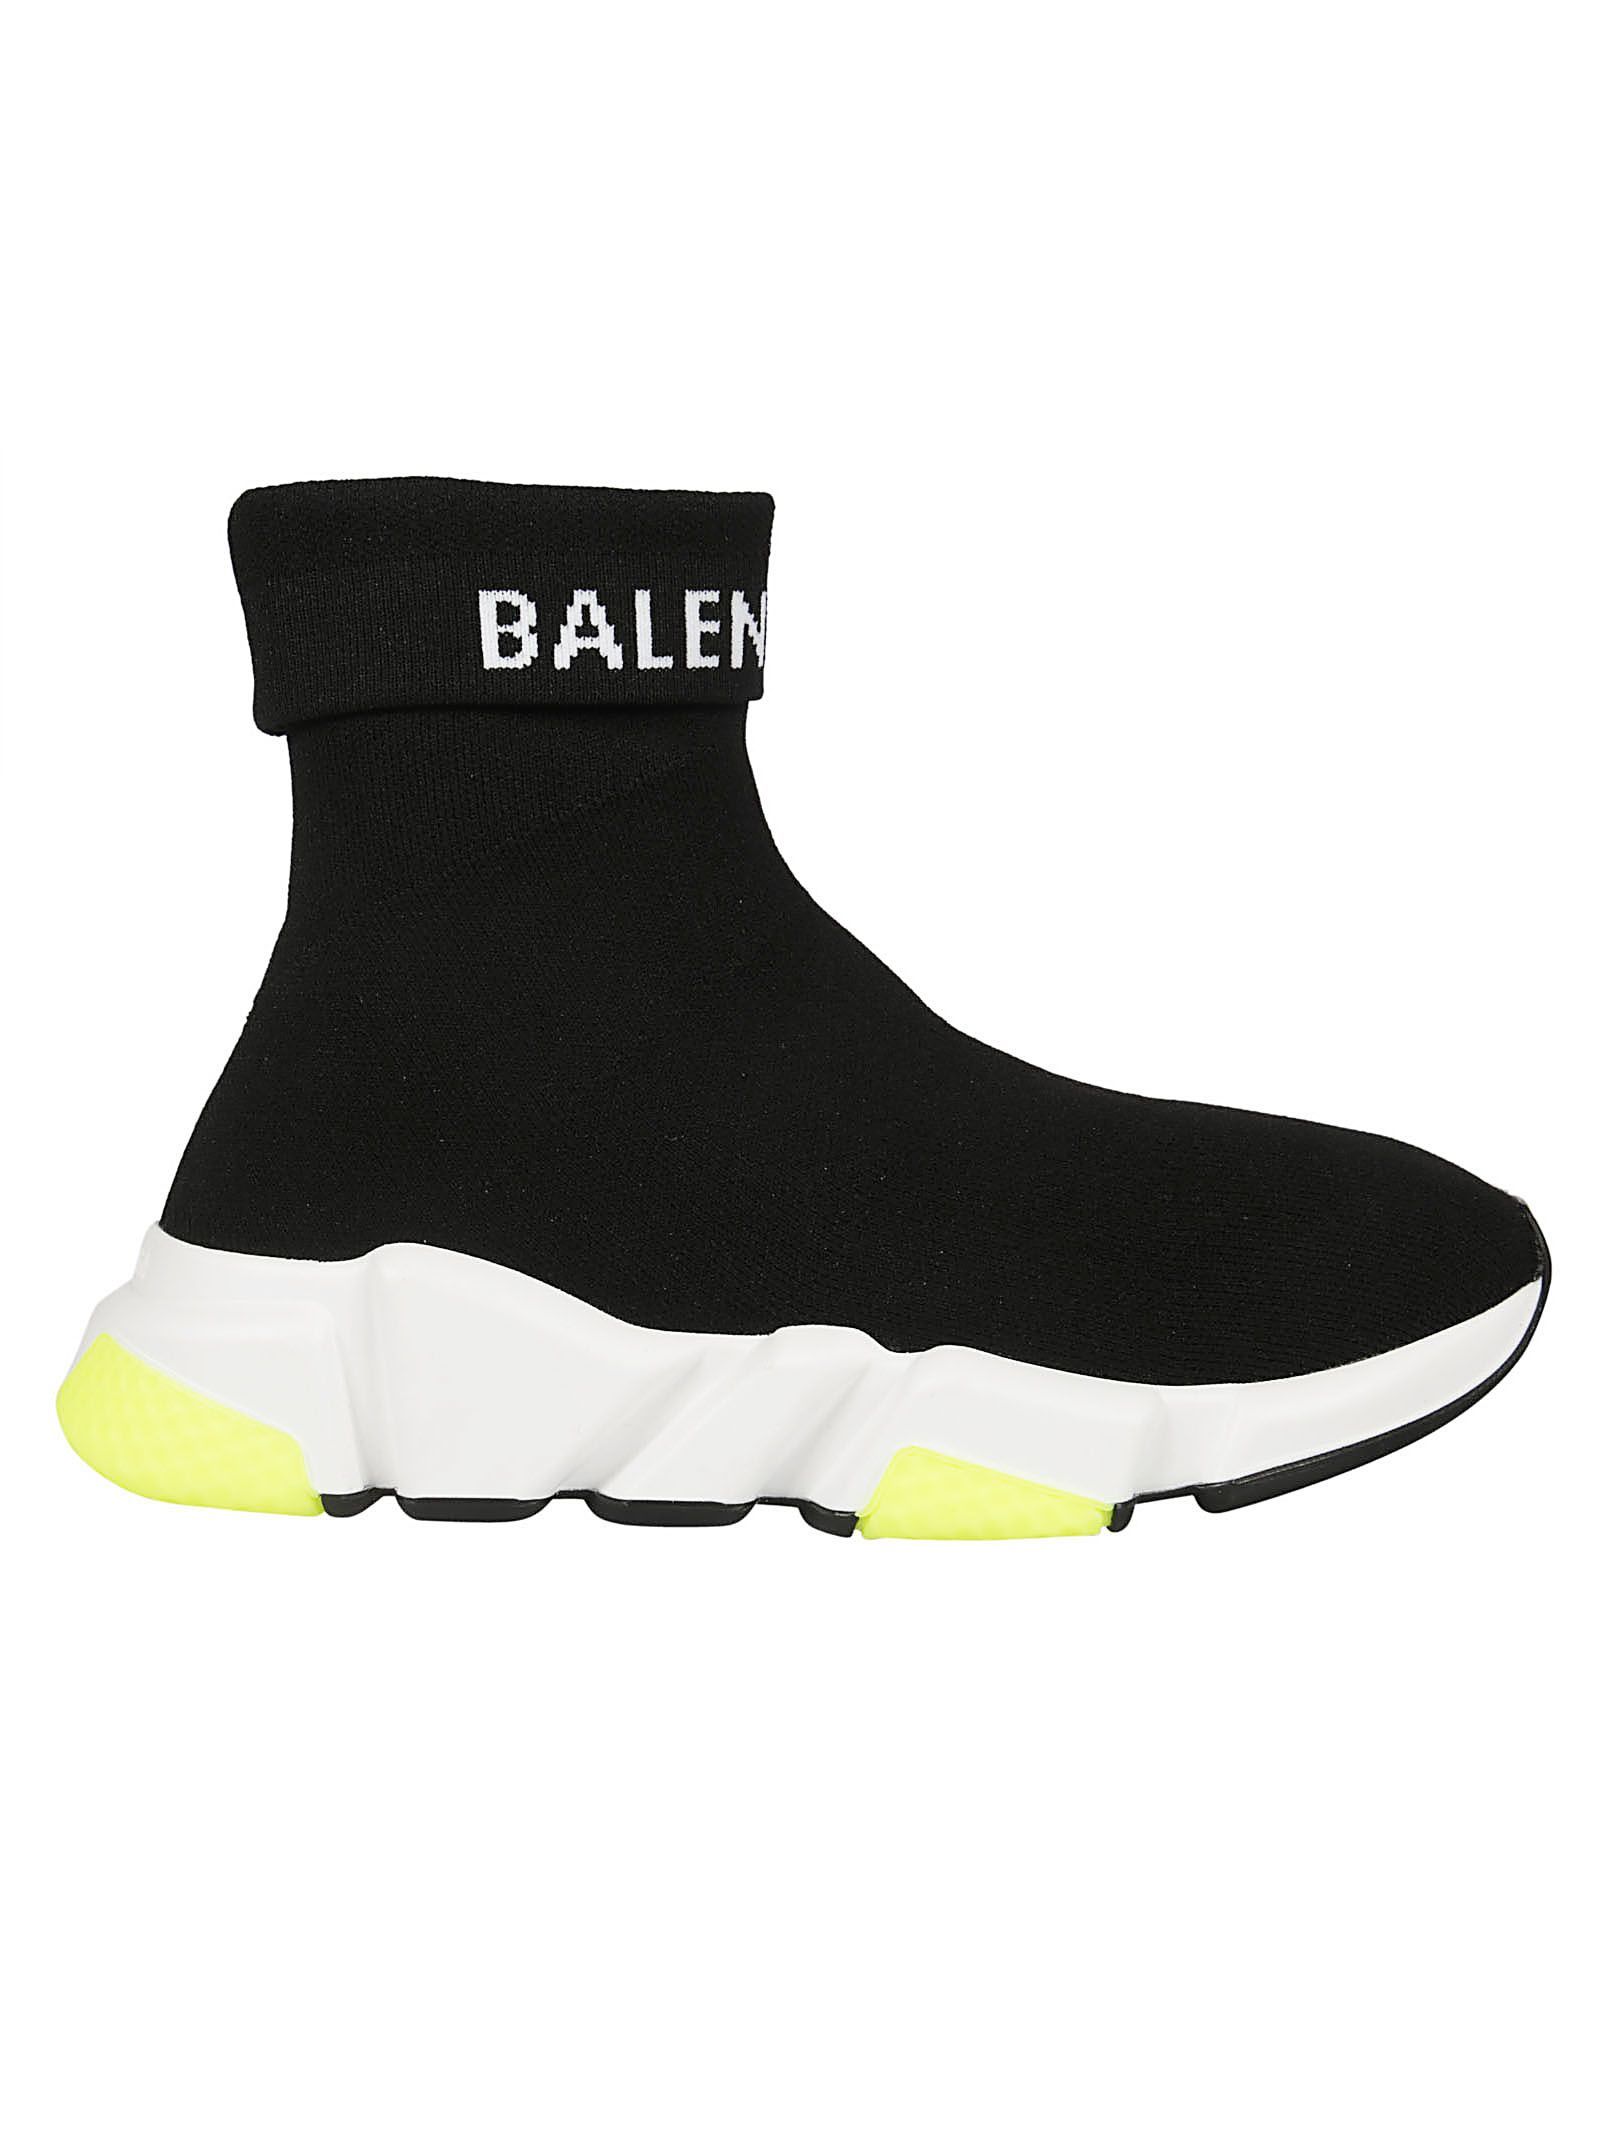 Balenciaga Speed Sneakers | Italist.com US